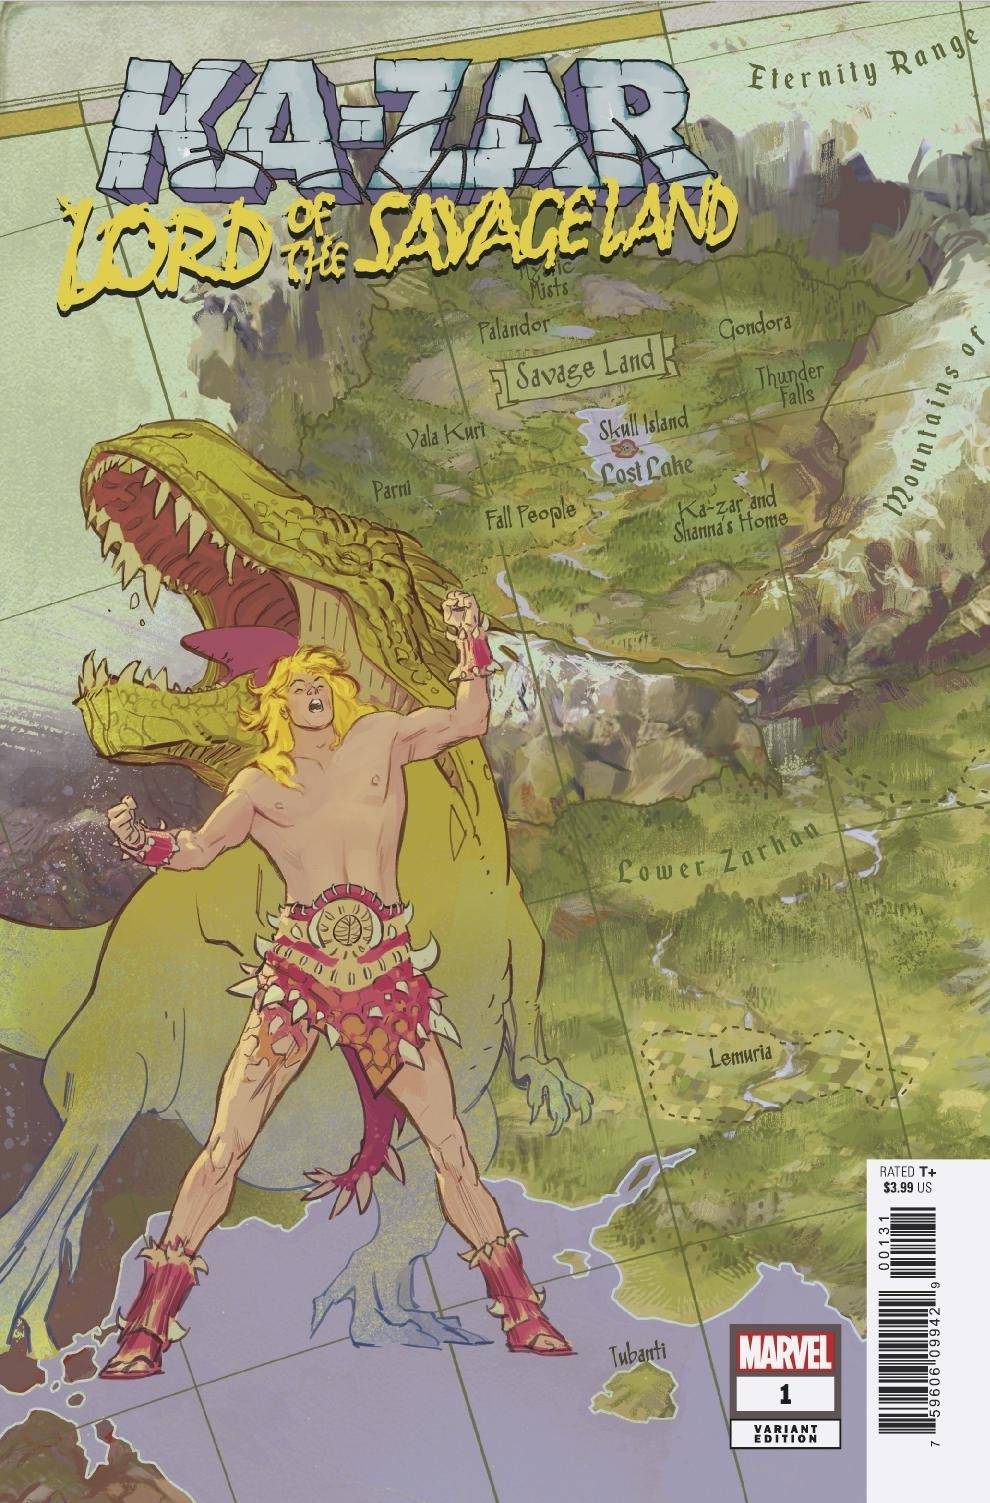 Ka-Zar Lord Savage Land #1 Garcia Map Variant (Of 5)